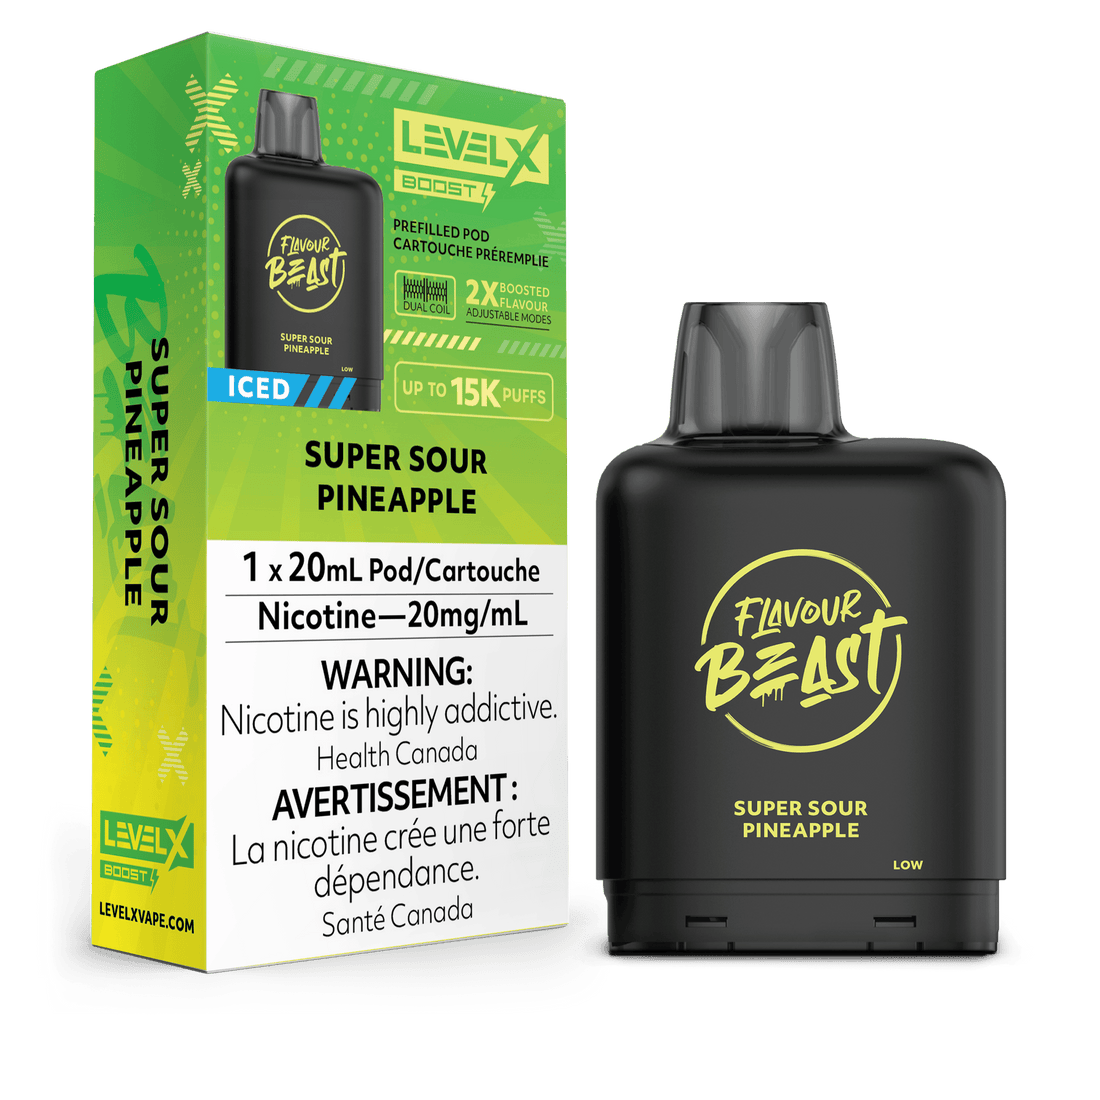 Level X Boost Flavour Beast - Super Sour Pineapple Iced - Vapor Shoppe